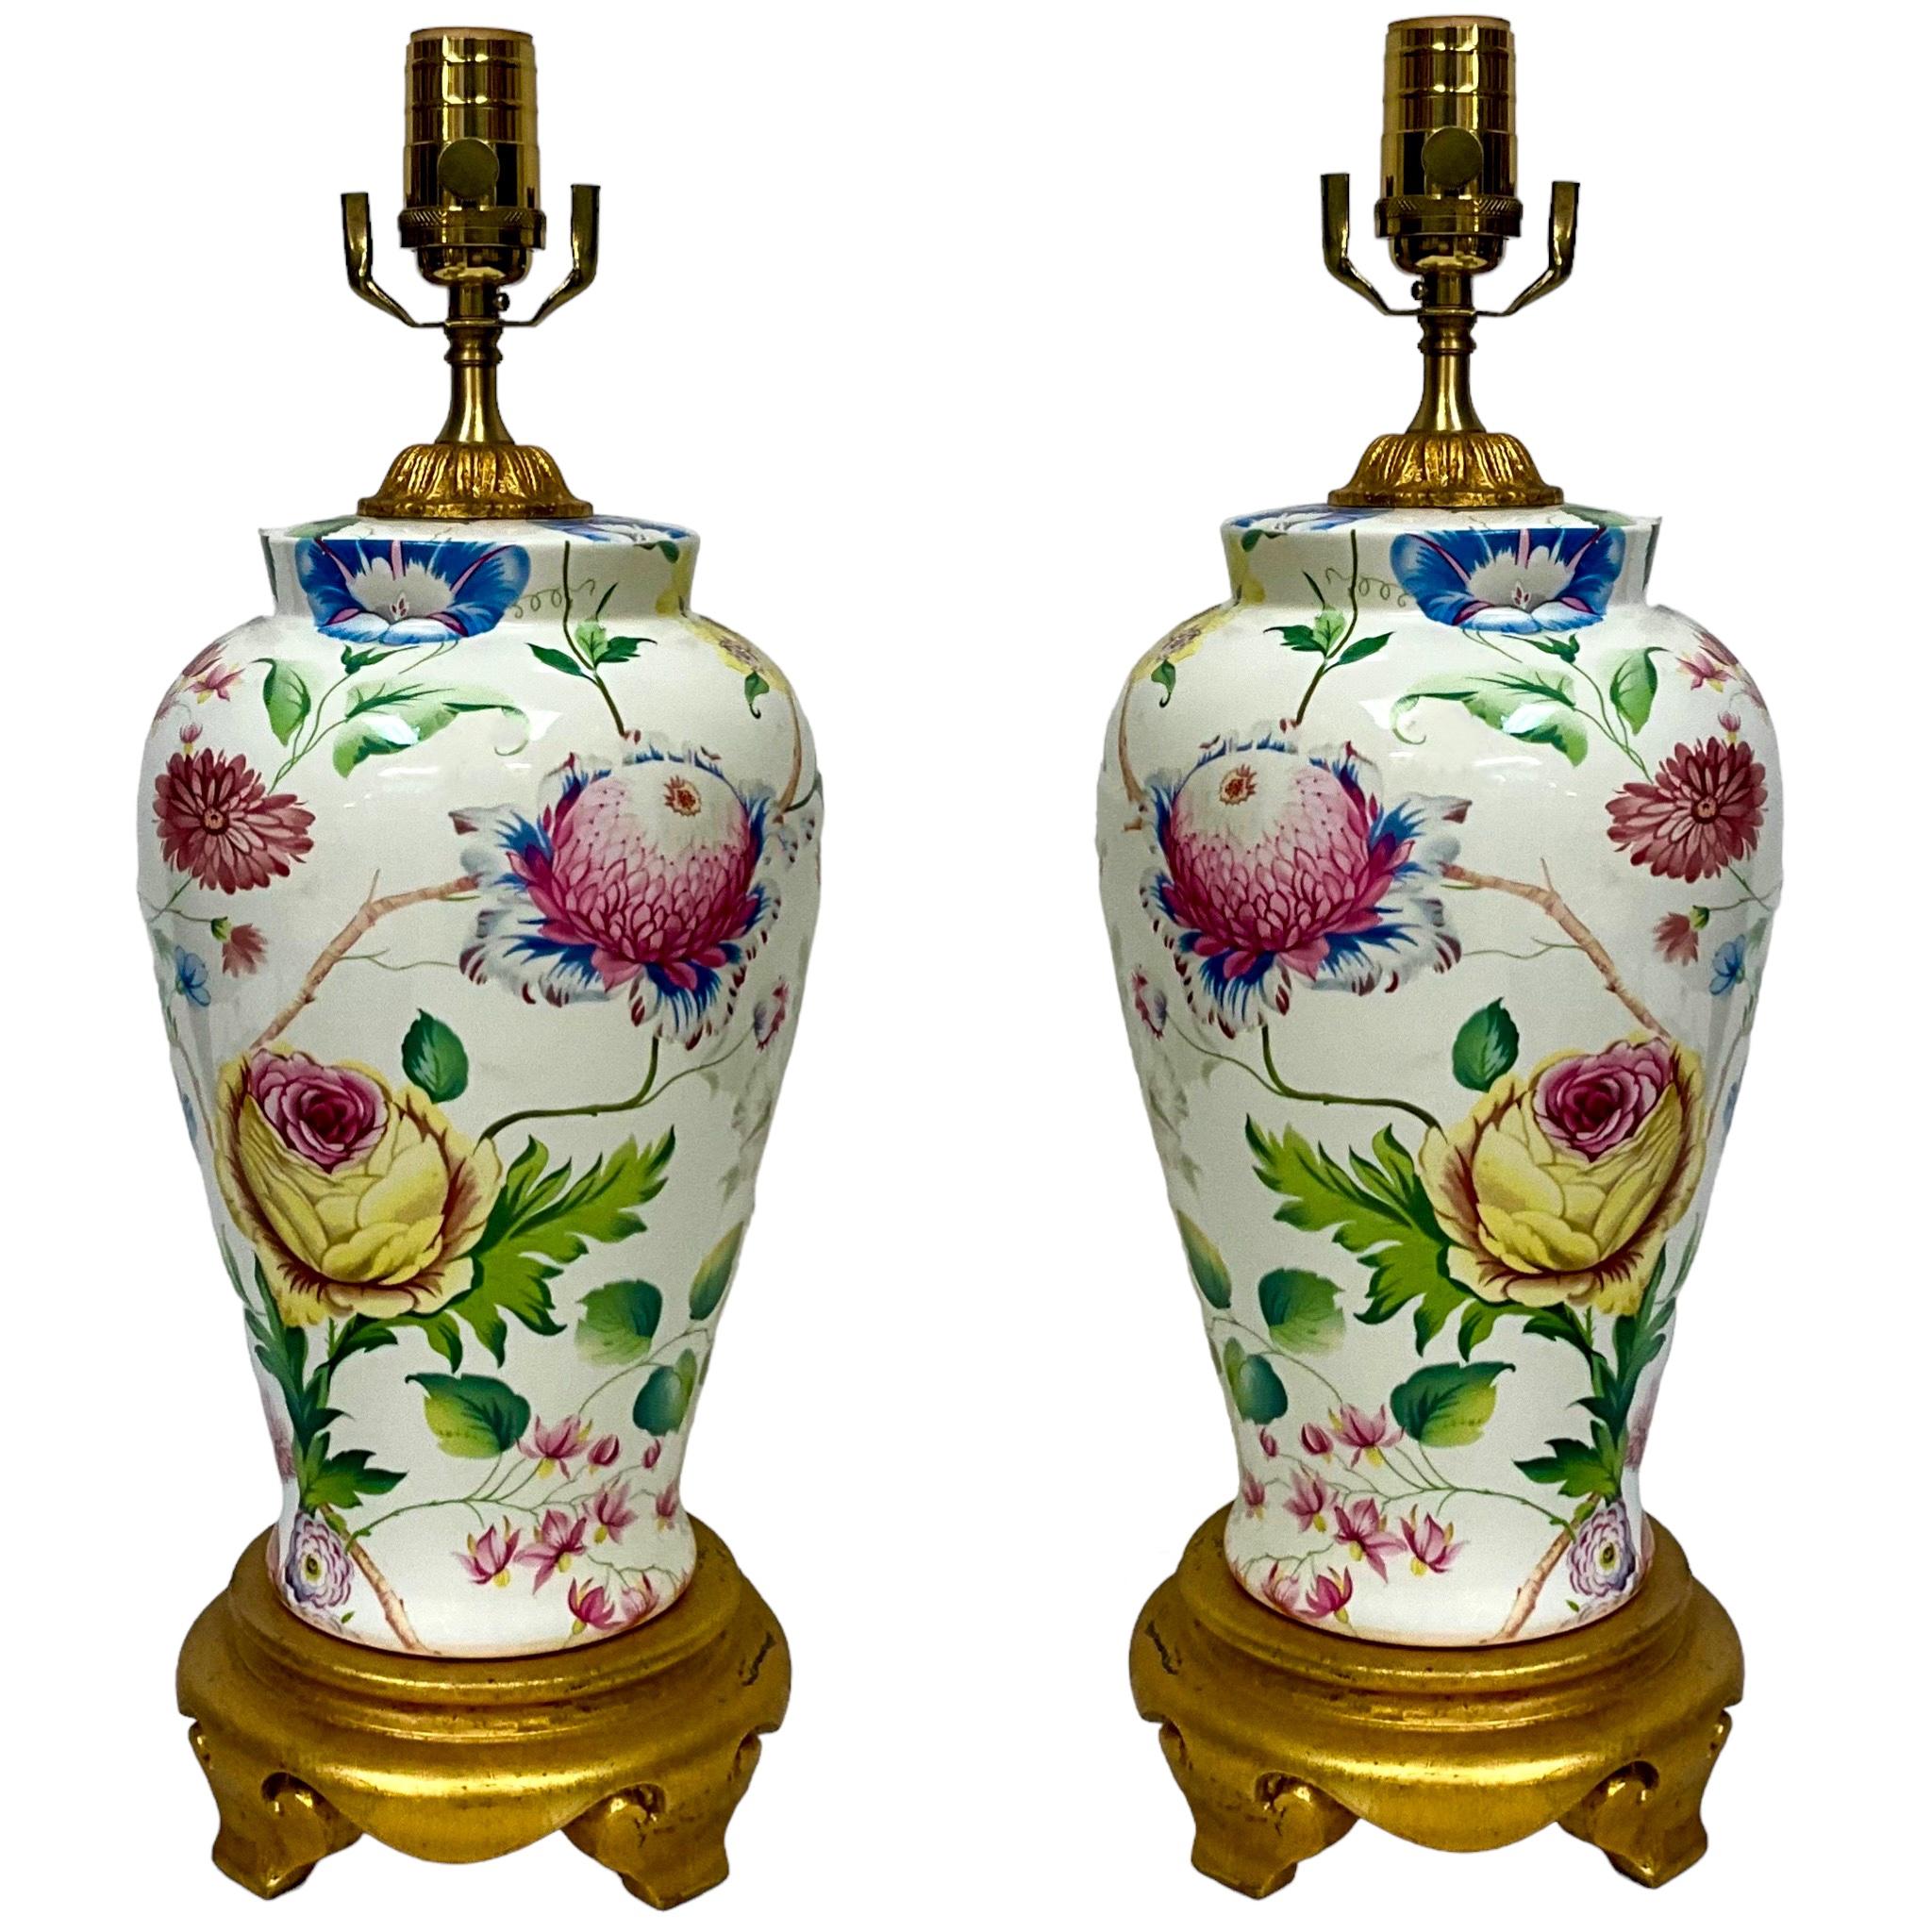 20th Century Porcelain Ginger Jar Form Floral / Botanical Table Lamps Att. Chelsea House-Pair For Sale